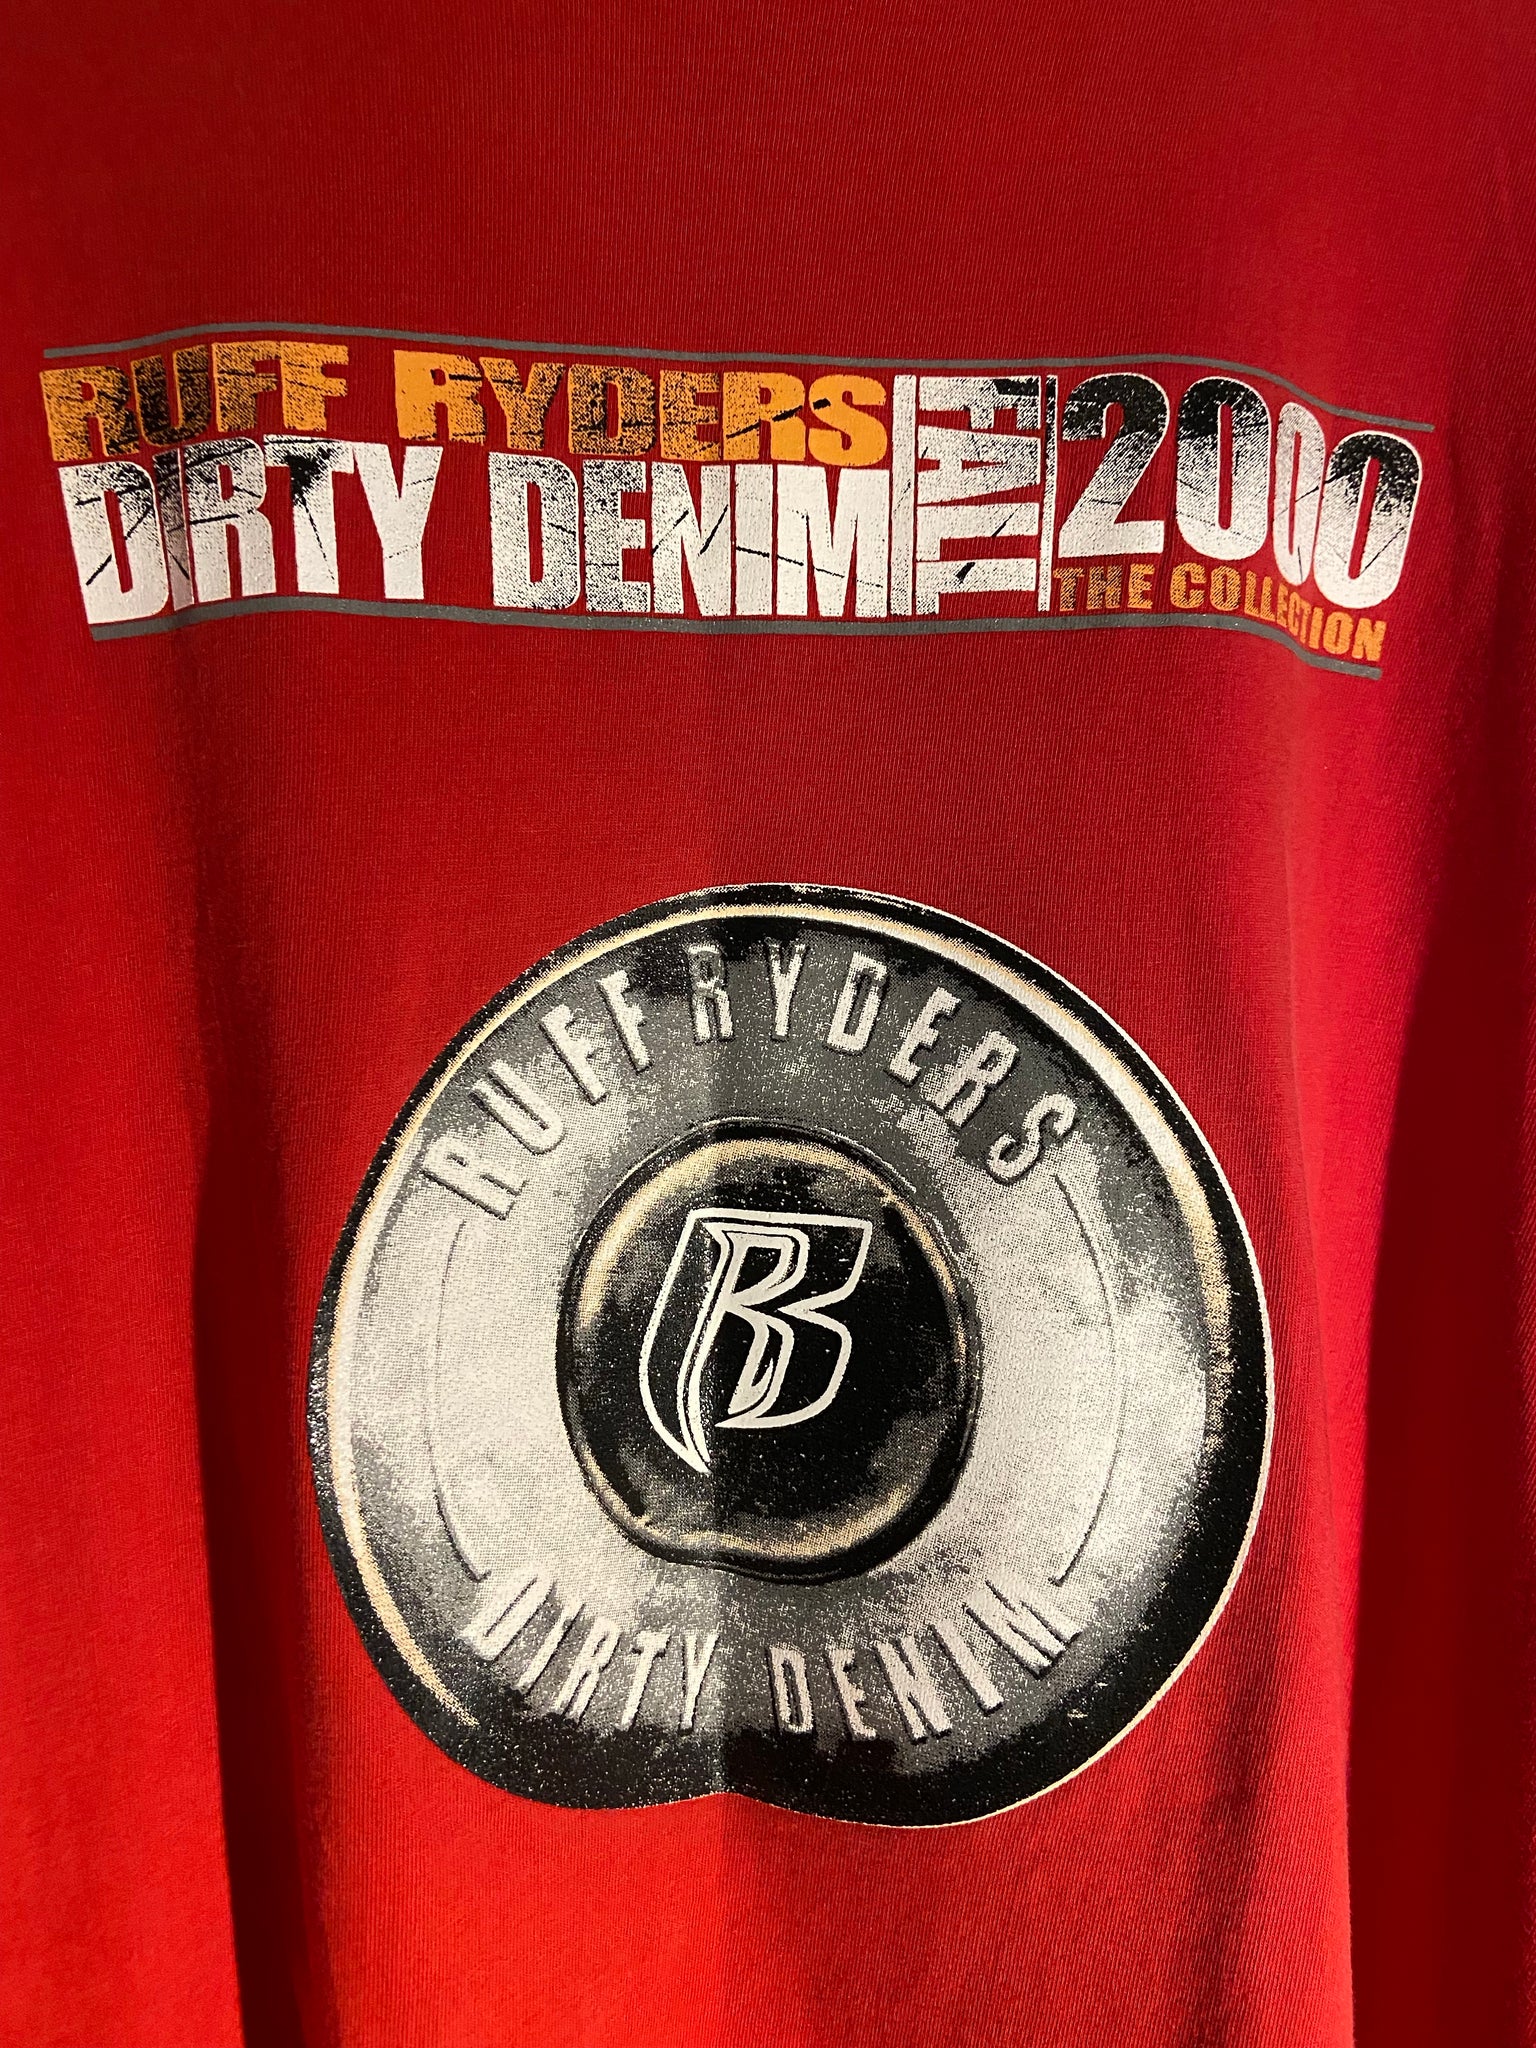 Vintage Ruff Ryders Dirty Denim T-Shirt